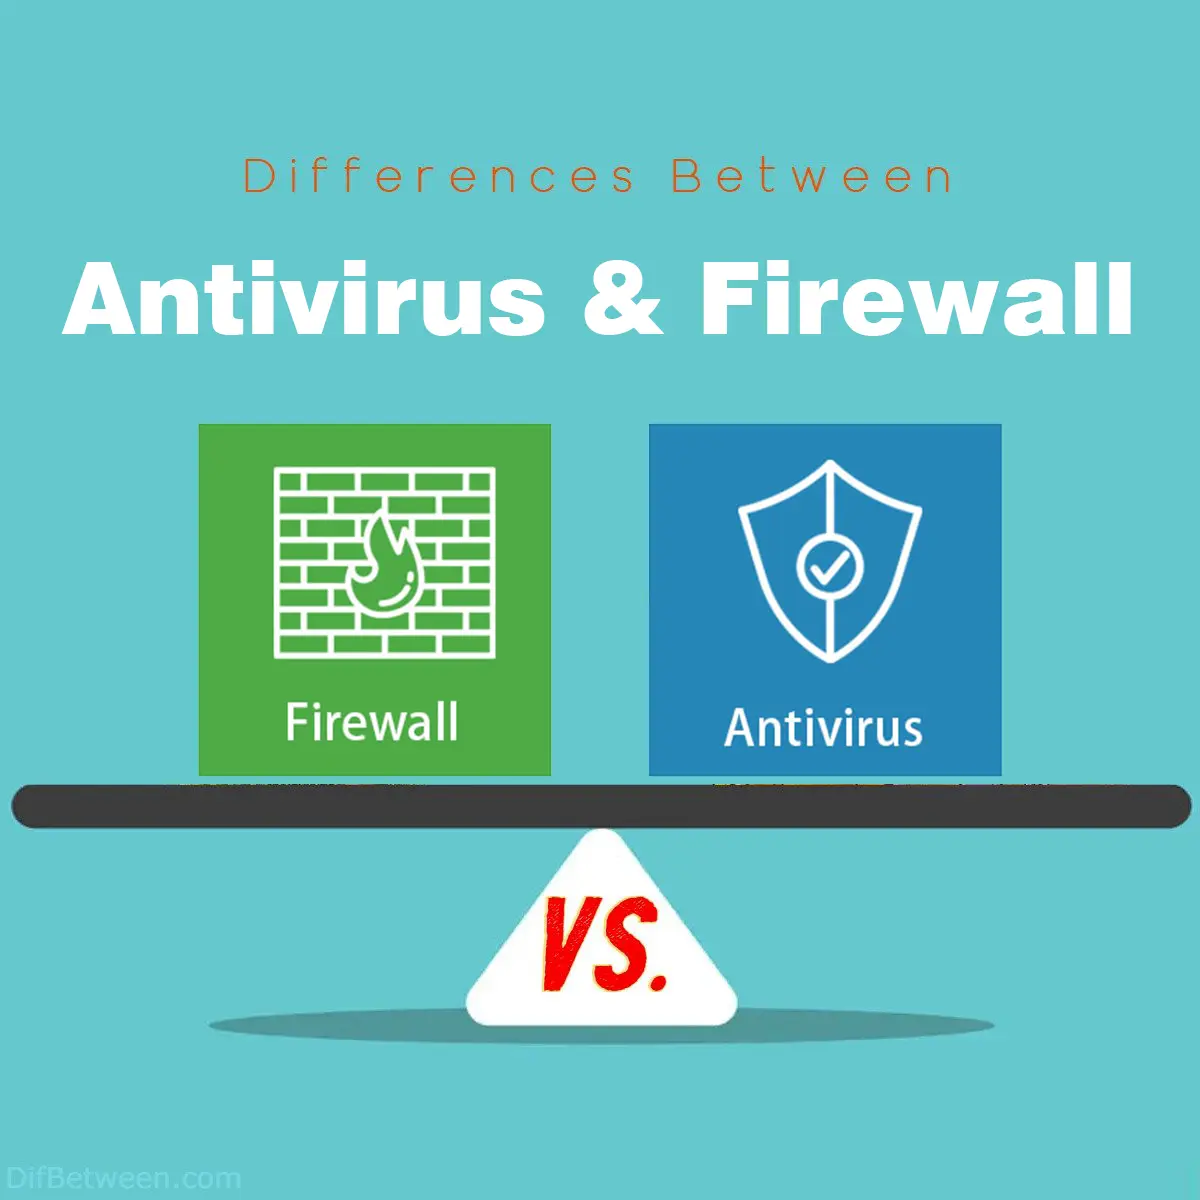 Differences Between Antivirus vs Firewall